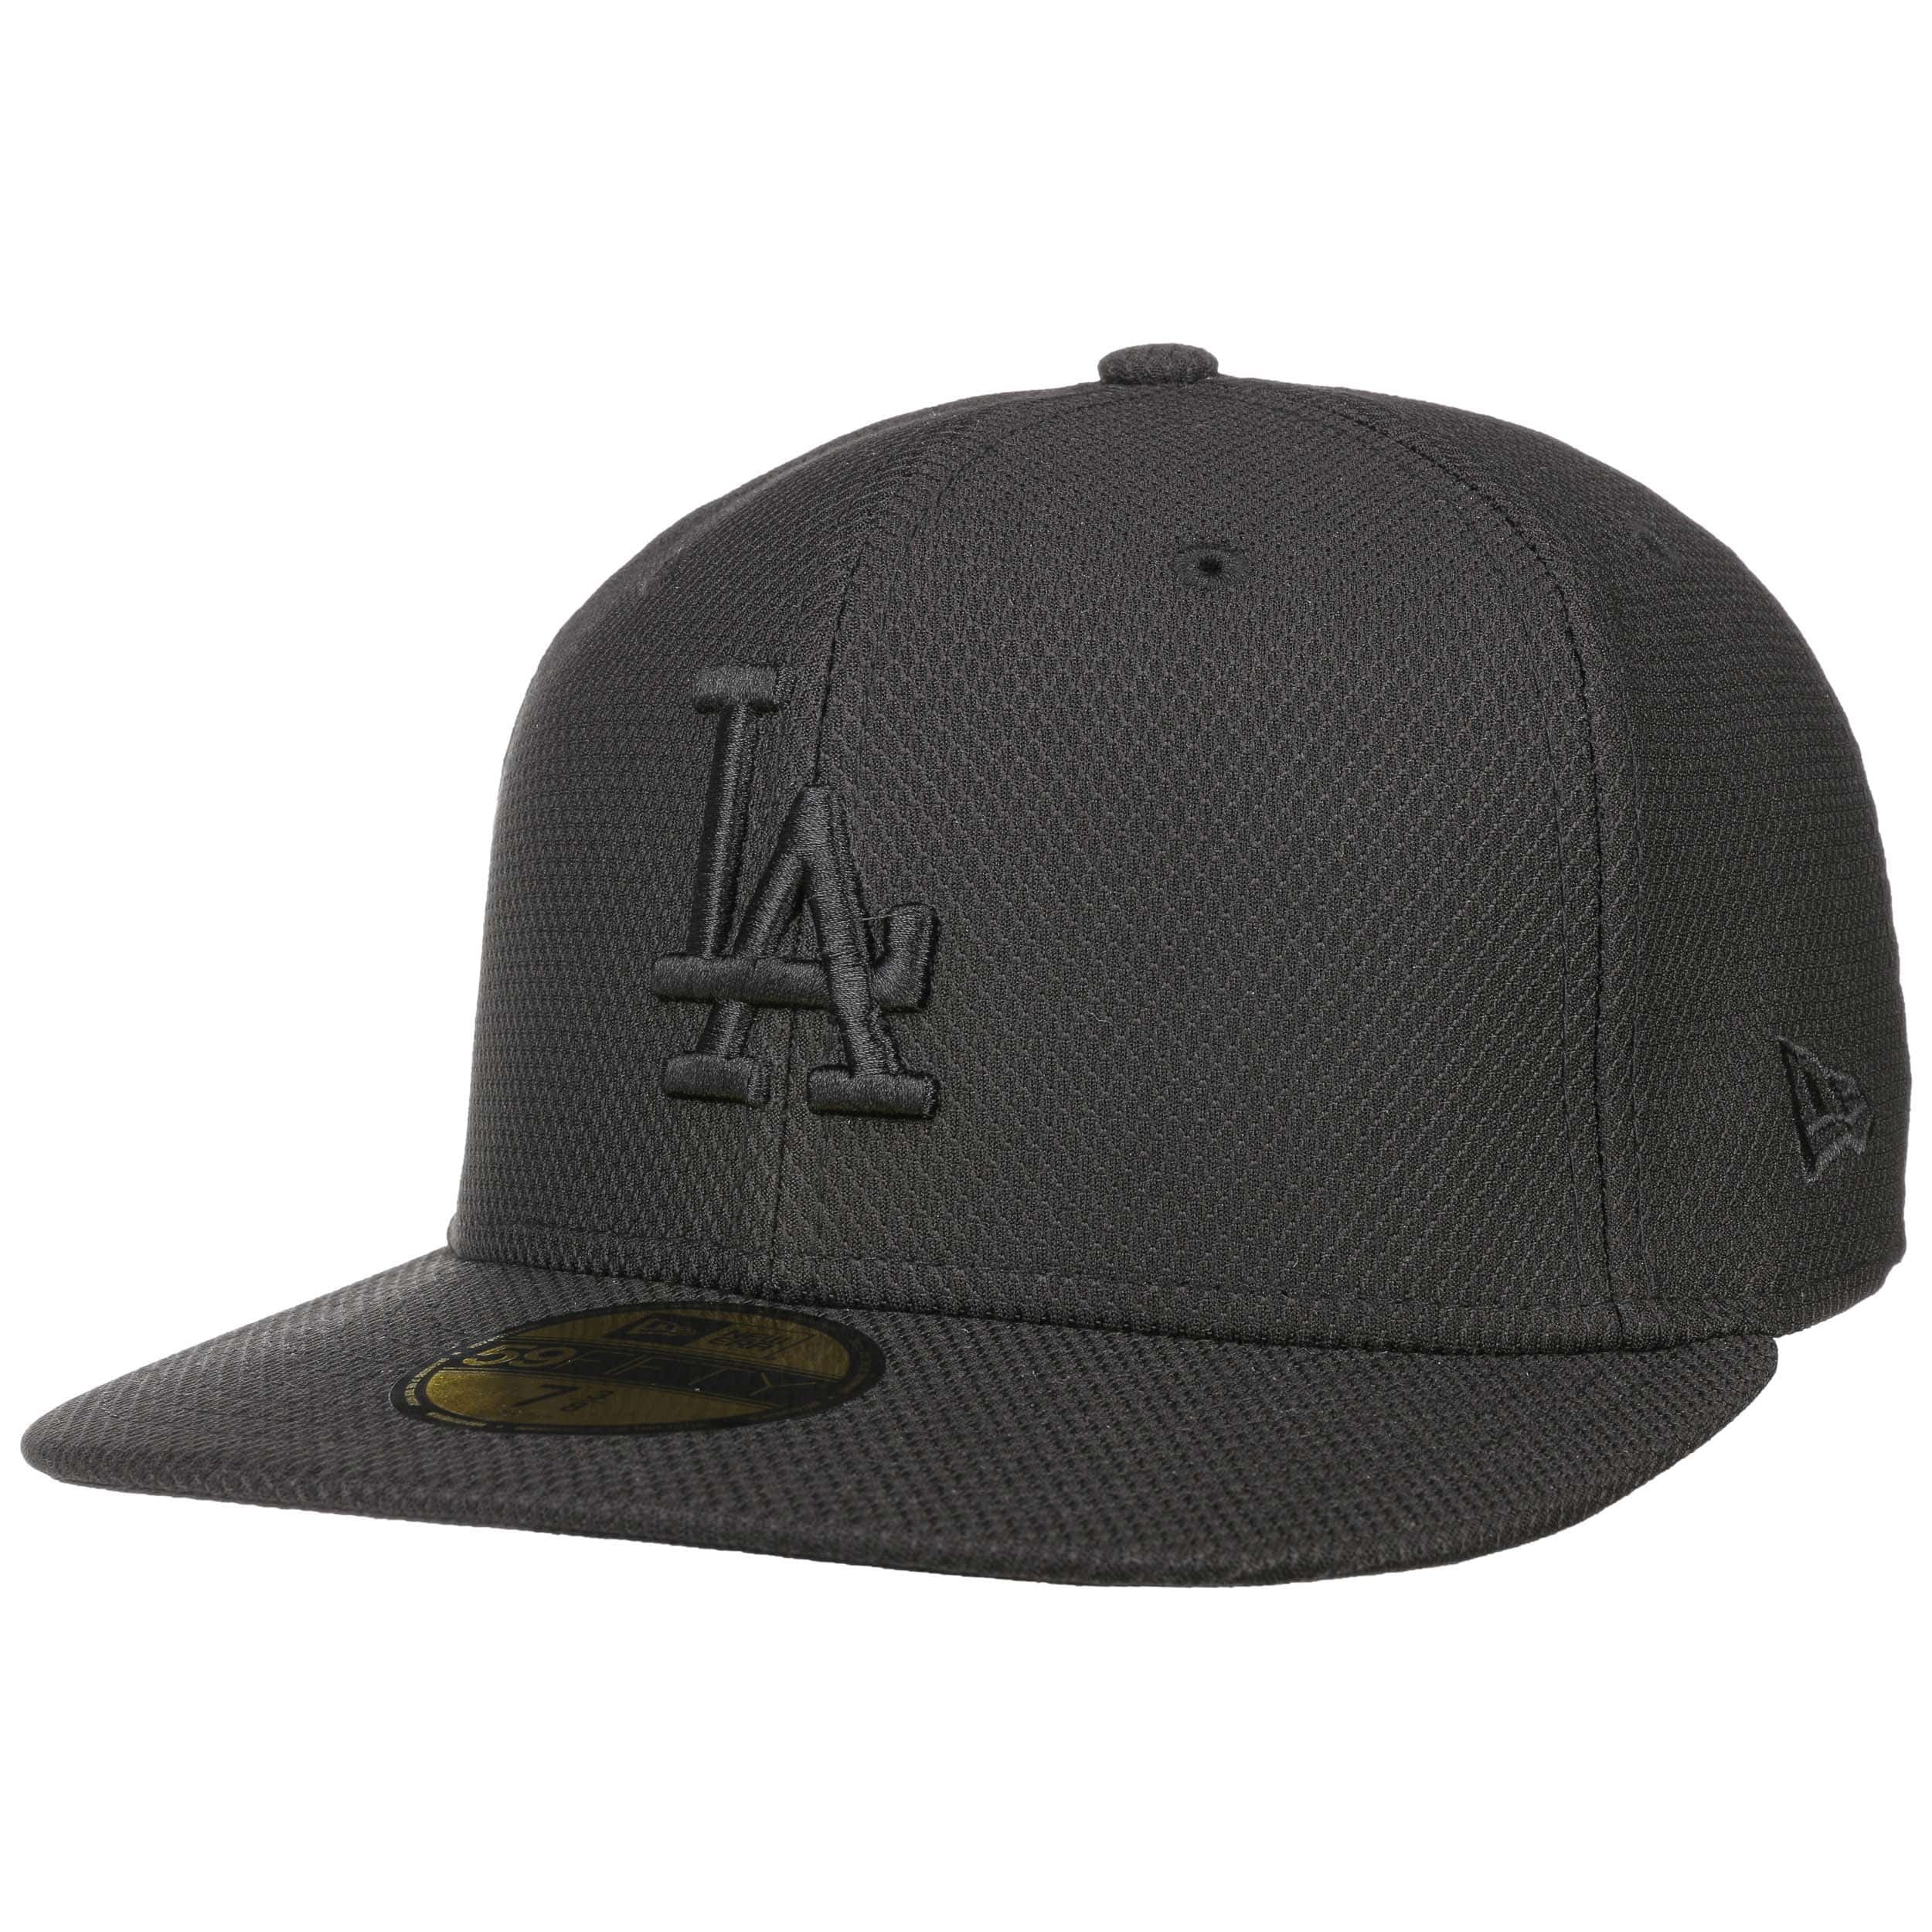 Men's La Dodgers Hats